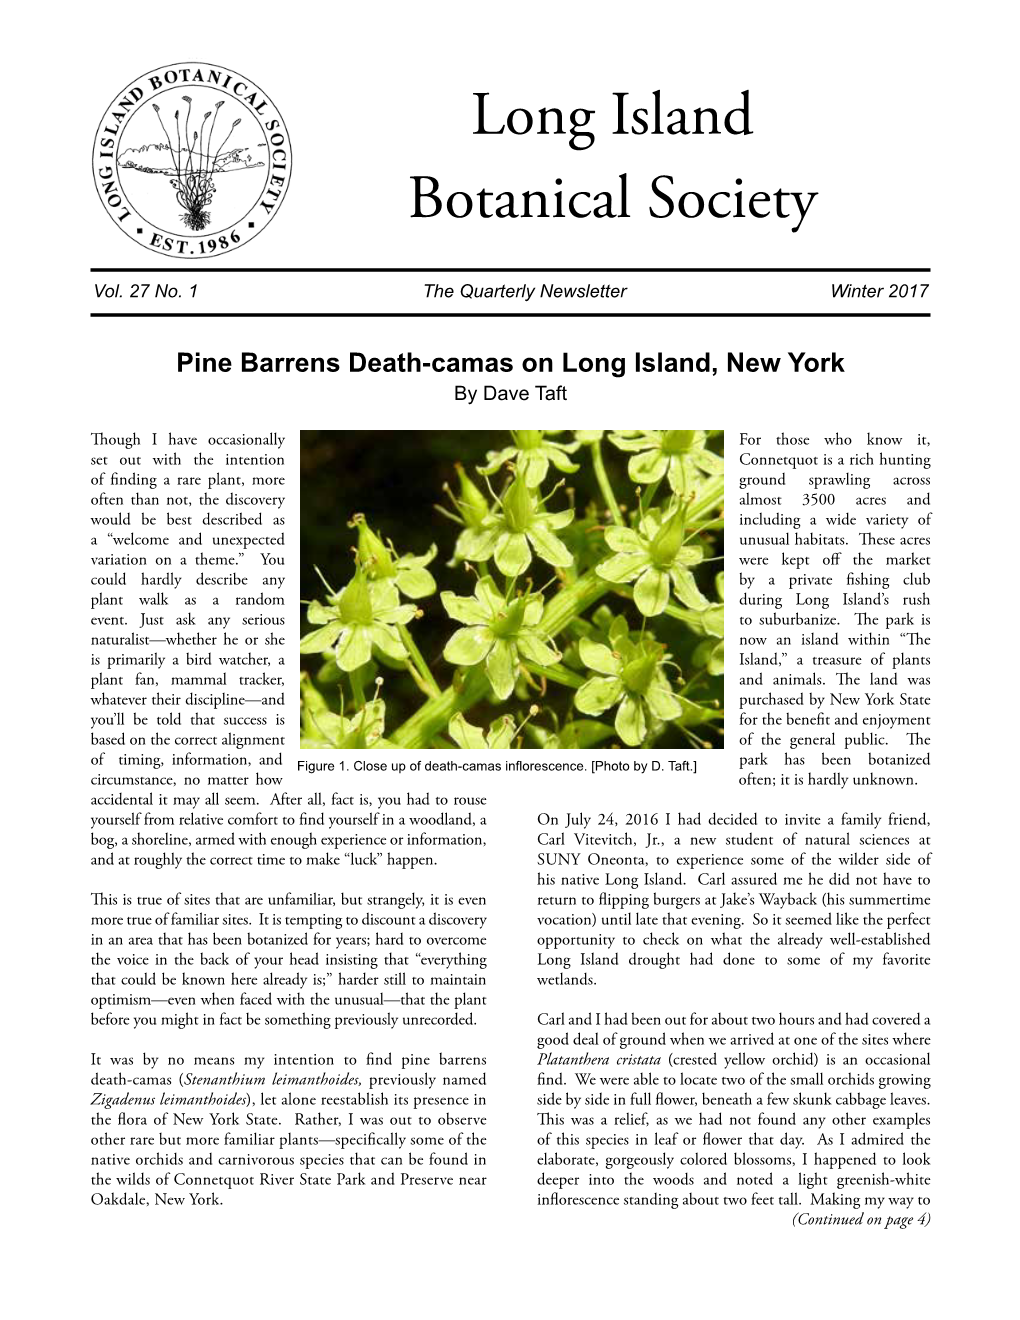 Pine Barrens Death-Camas on Long Island, New York by Dave Taft